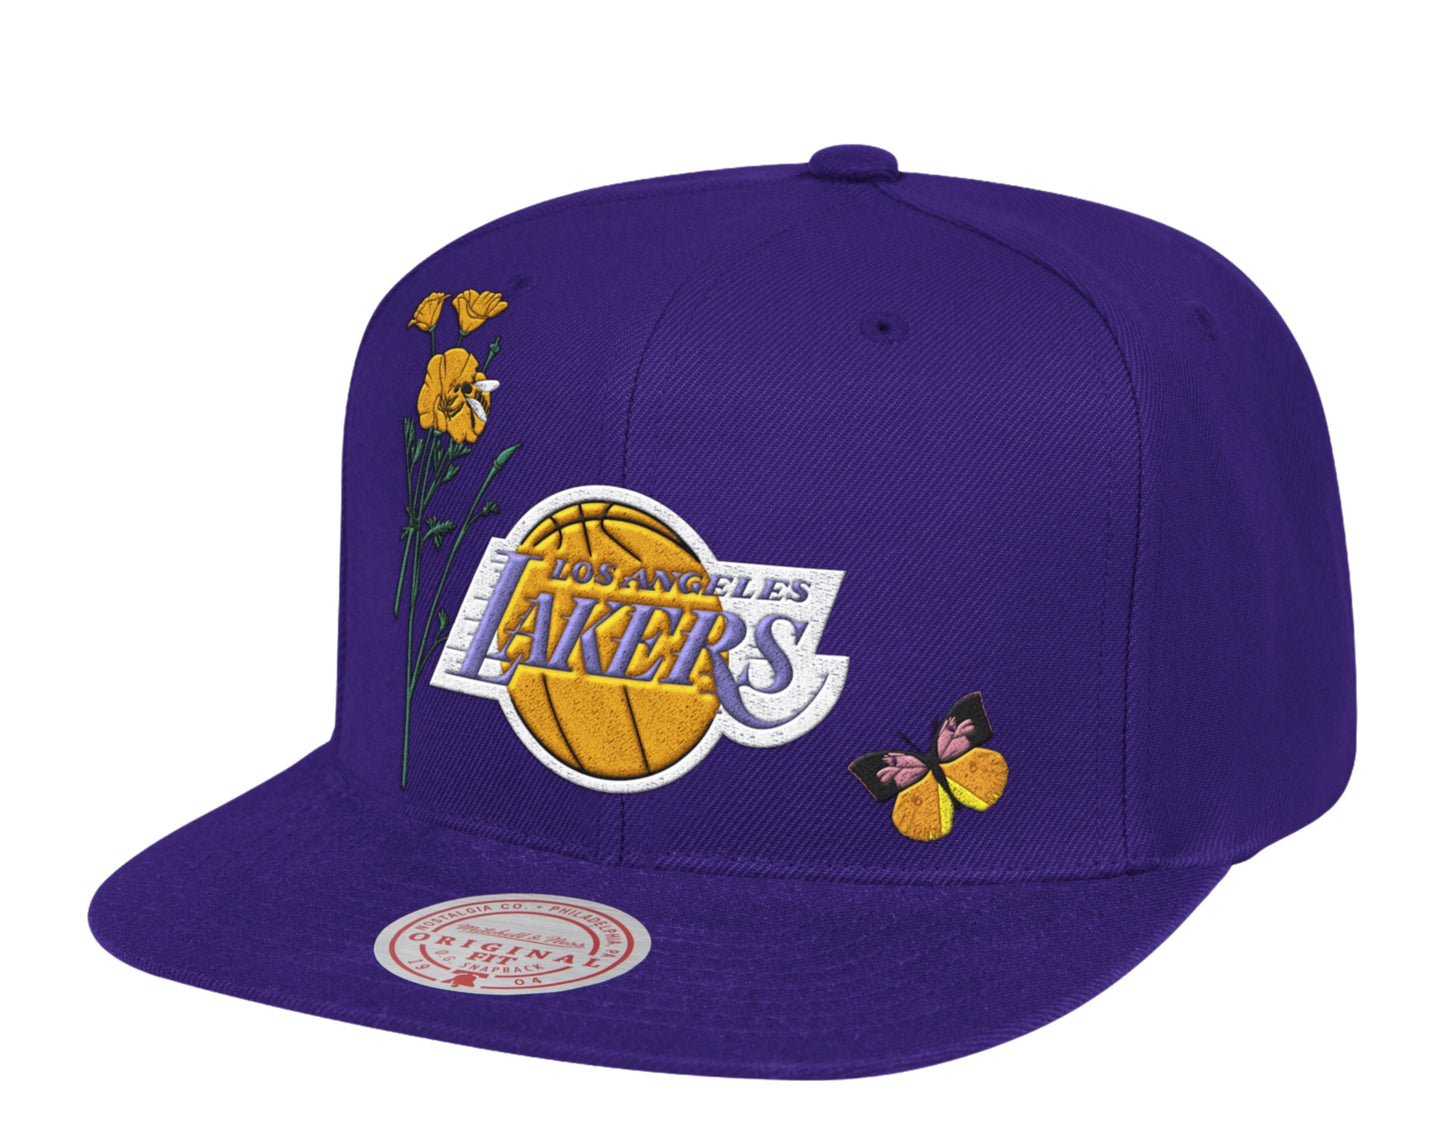 Mitchell & Ness Los Angeles Lakers Low Pro Original Fit Snapback Cap